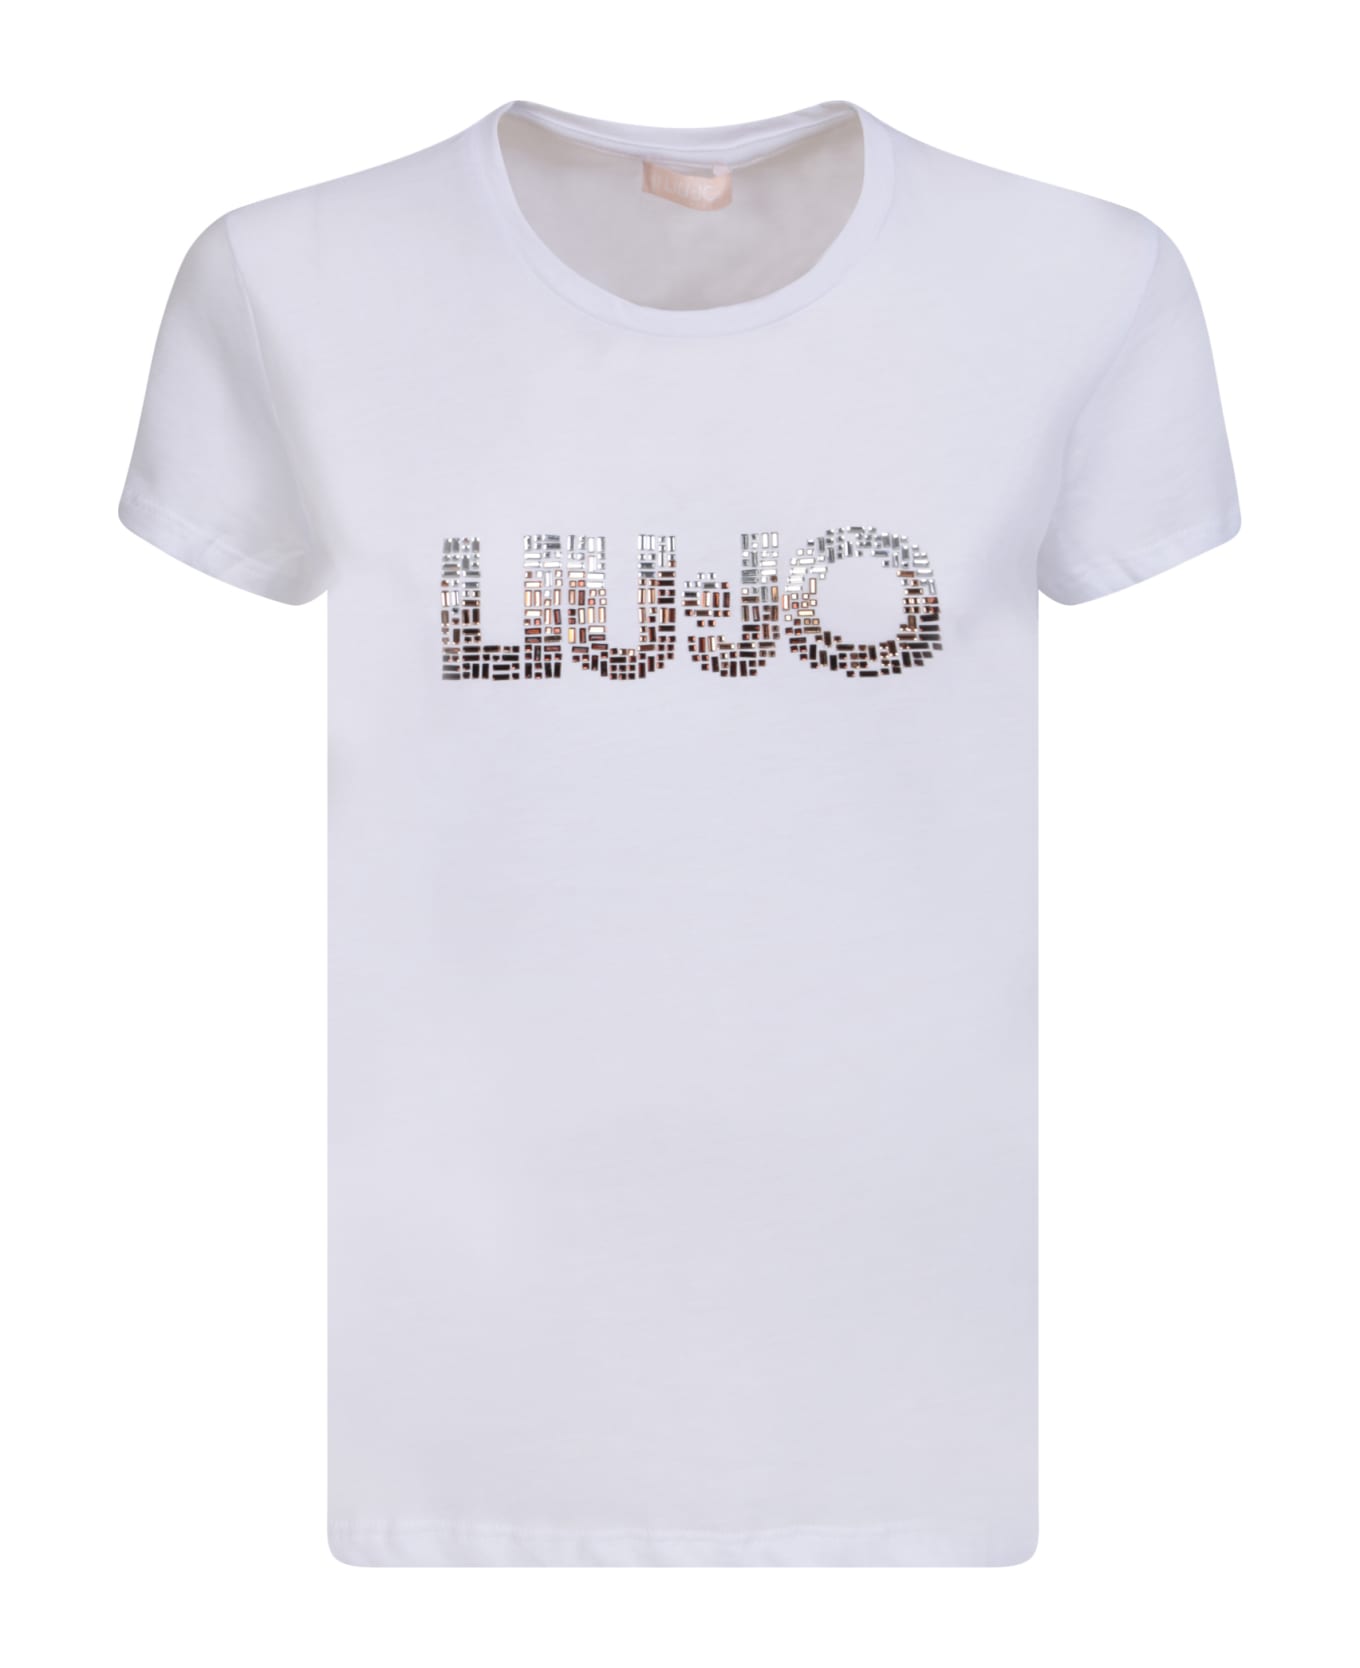 Liu-Jo Rhinestone Details White T-shirt By Liu Jo - White